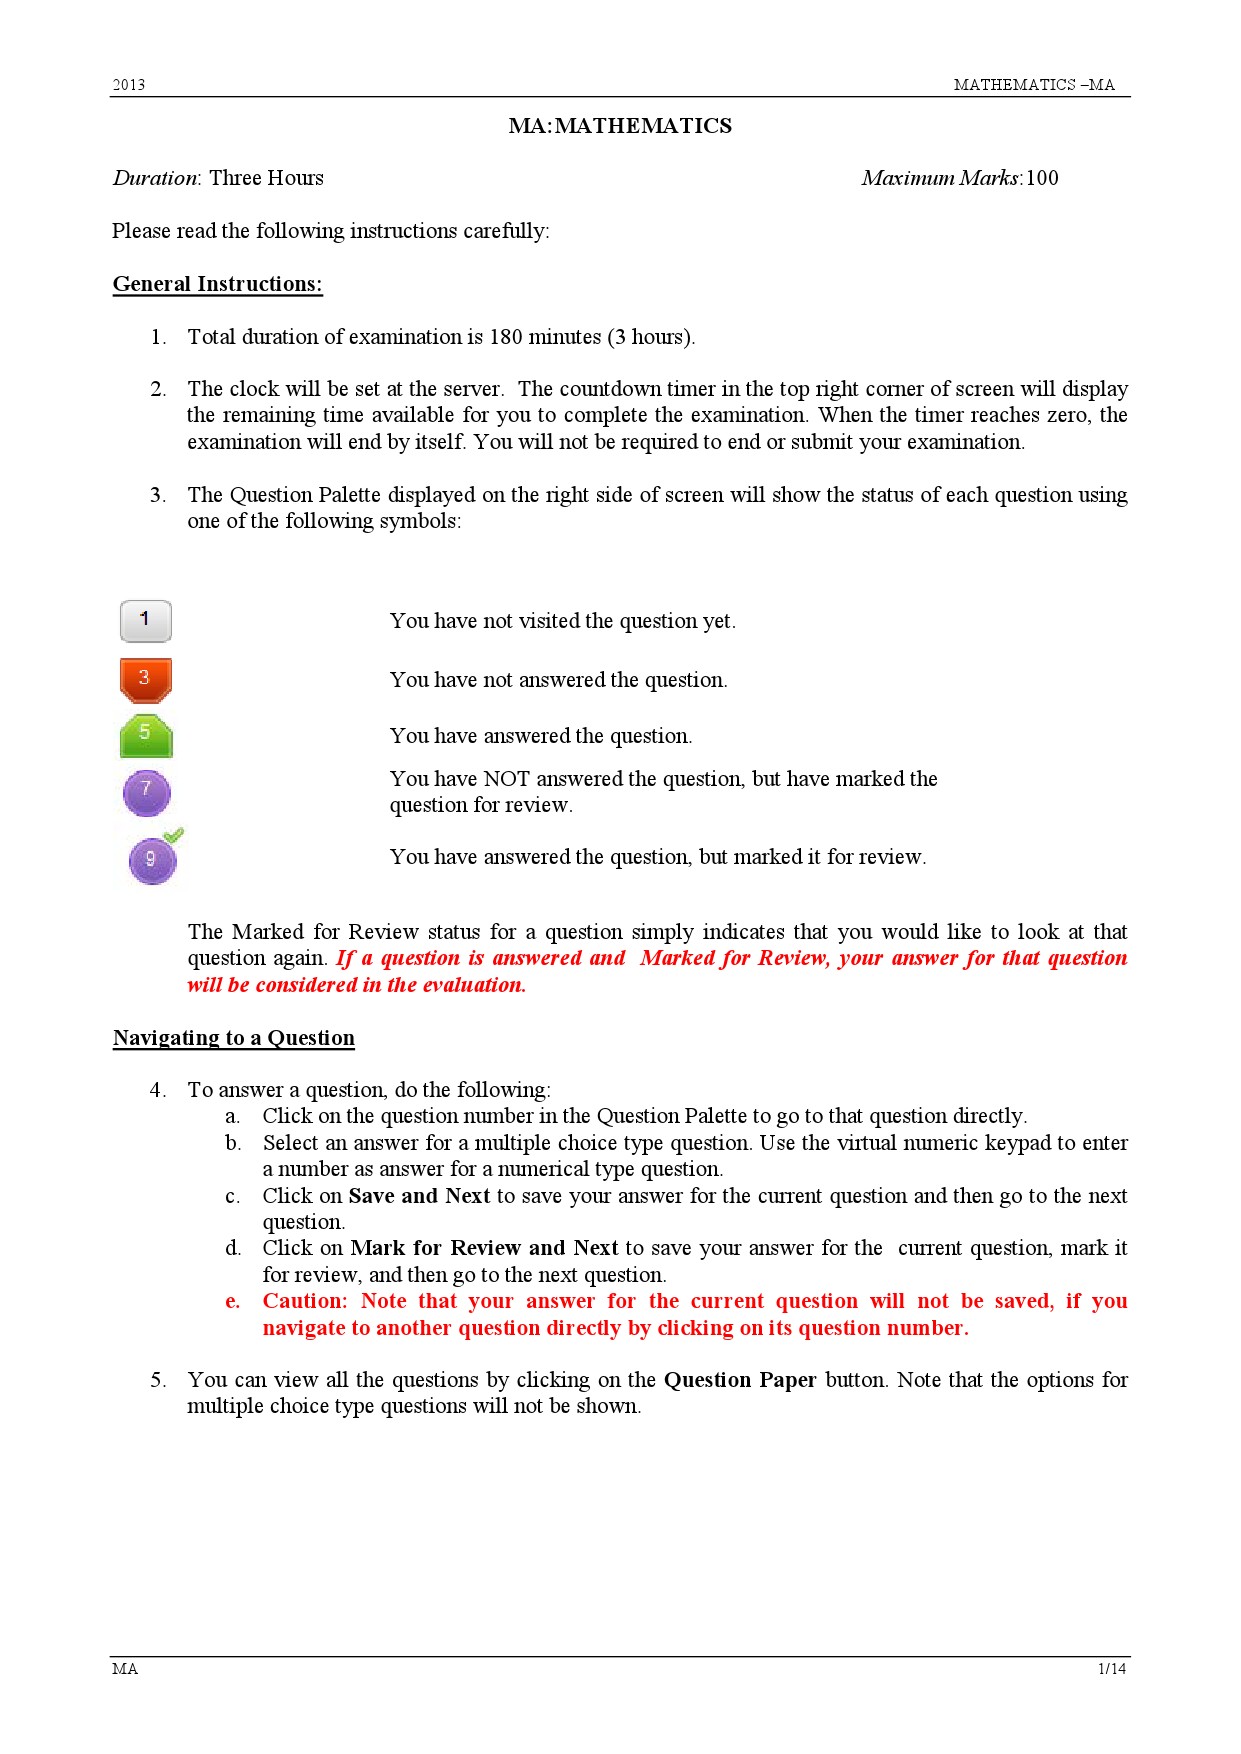 GATE Exam Question Paper 2013 Mathematics 1